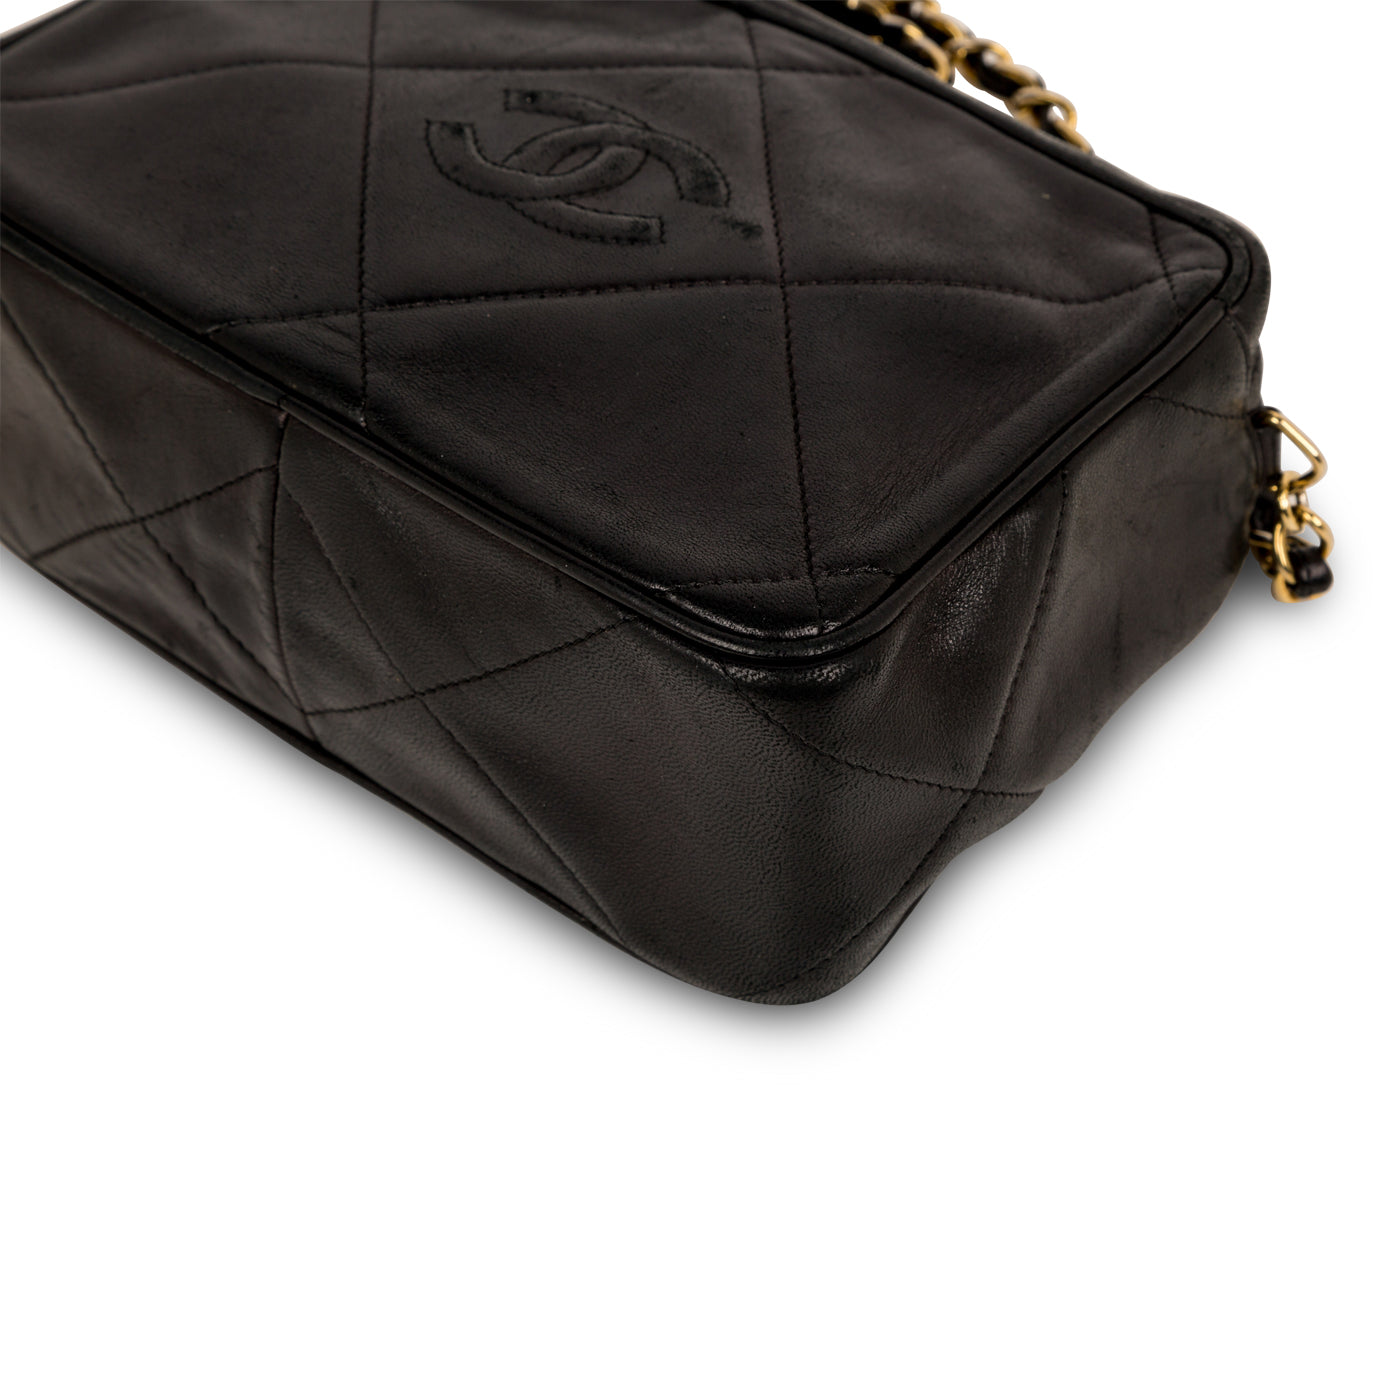 Chanel - Vintage Lambskin Tassel Bag - Black Lambskin - Vintage